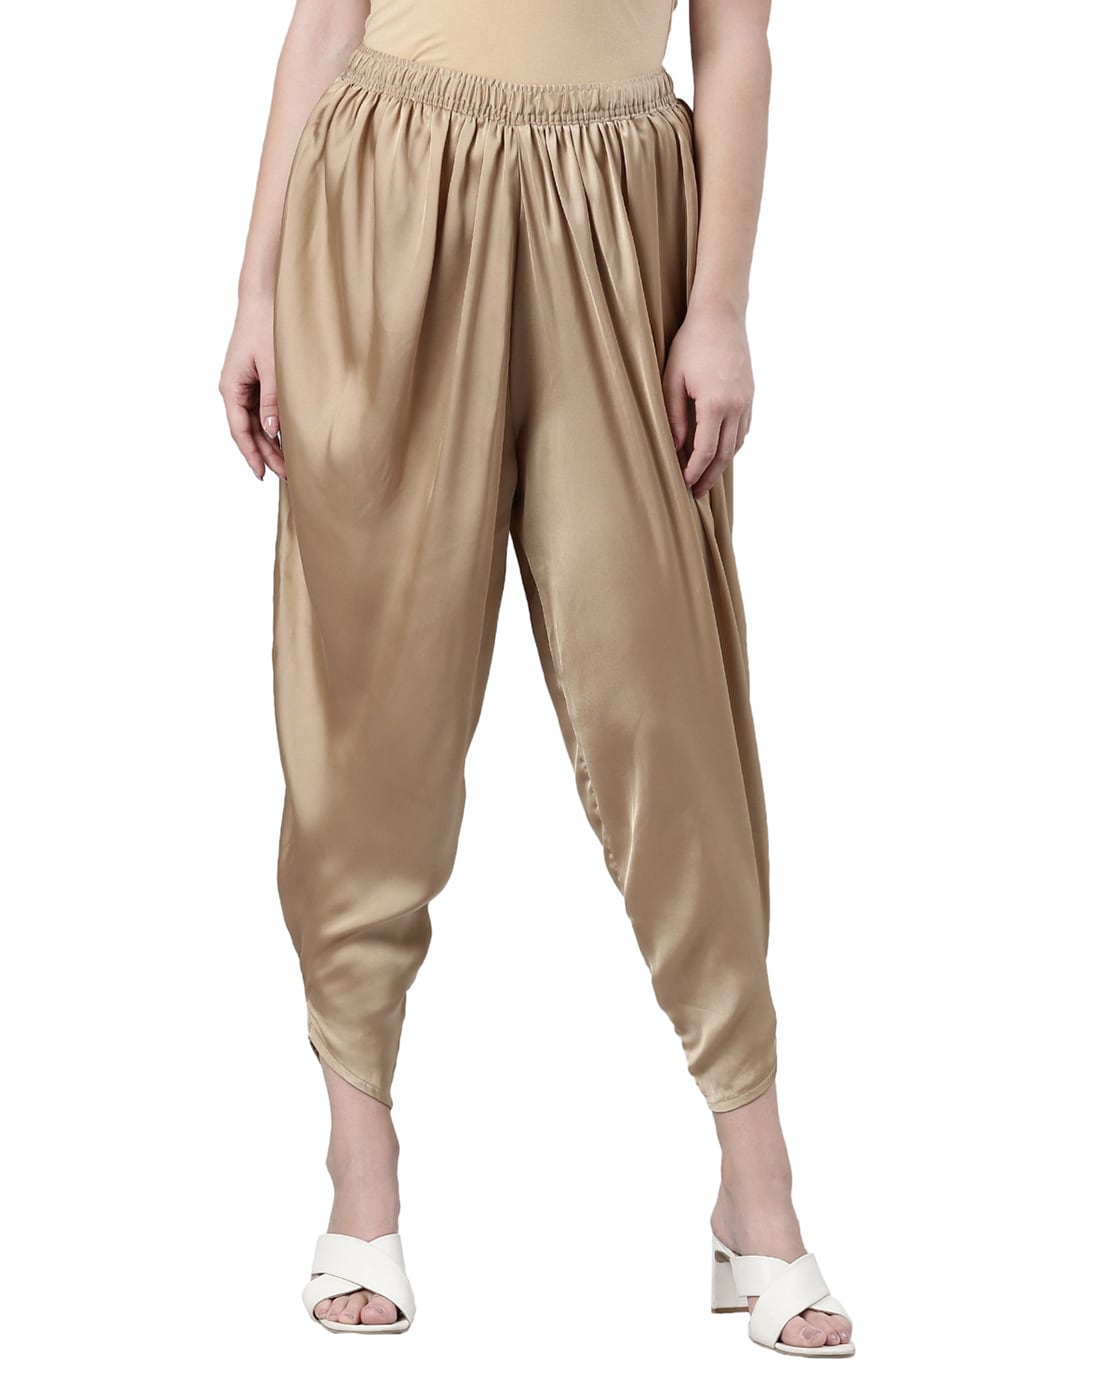 Buy Women's Designer Harem Pants | Grey | Fits Waist Size 28